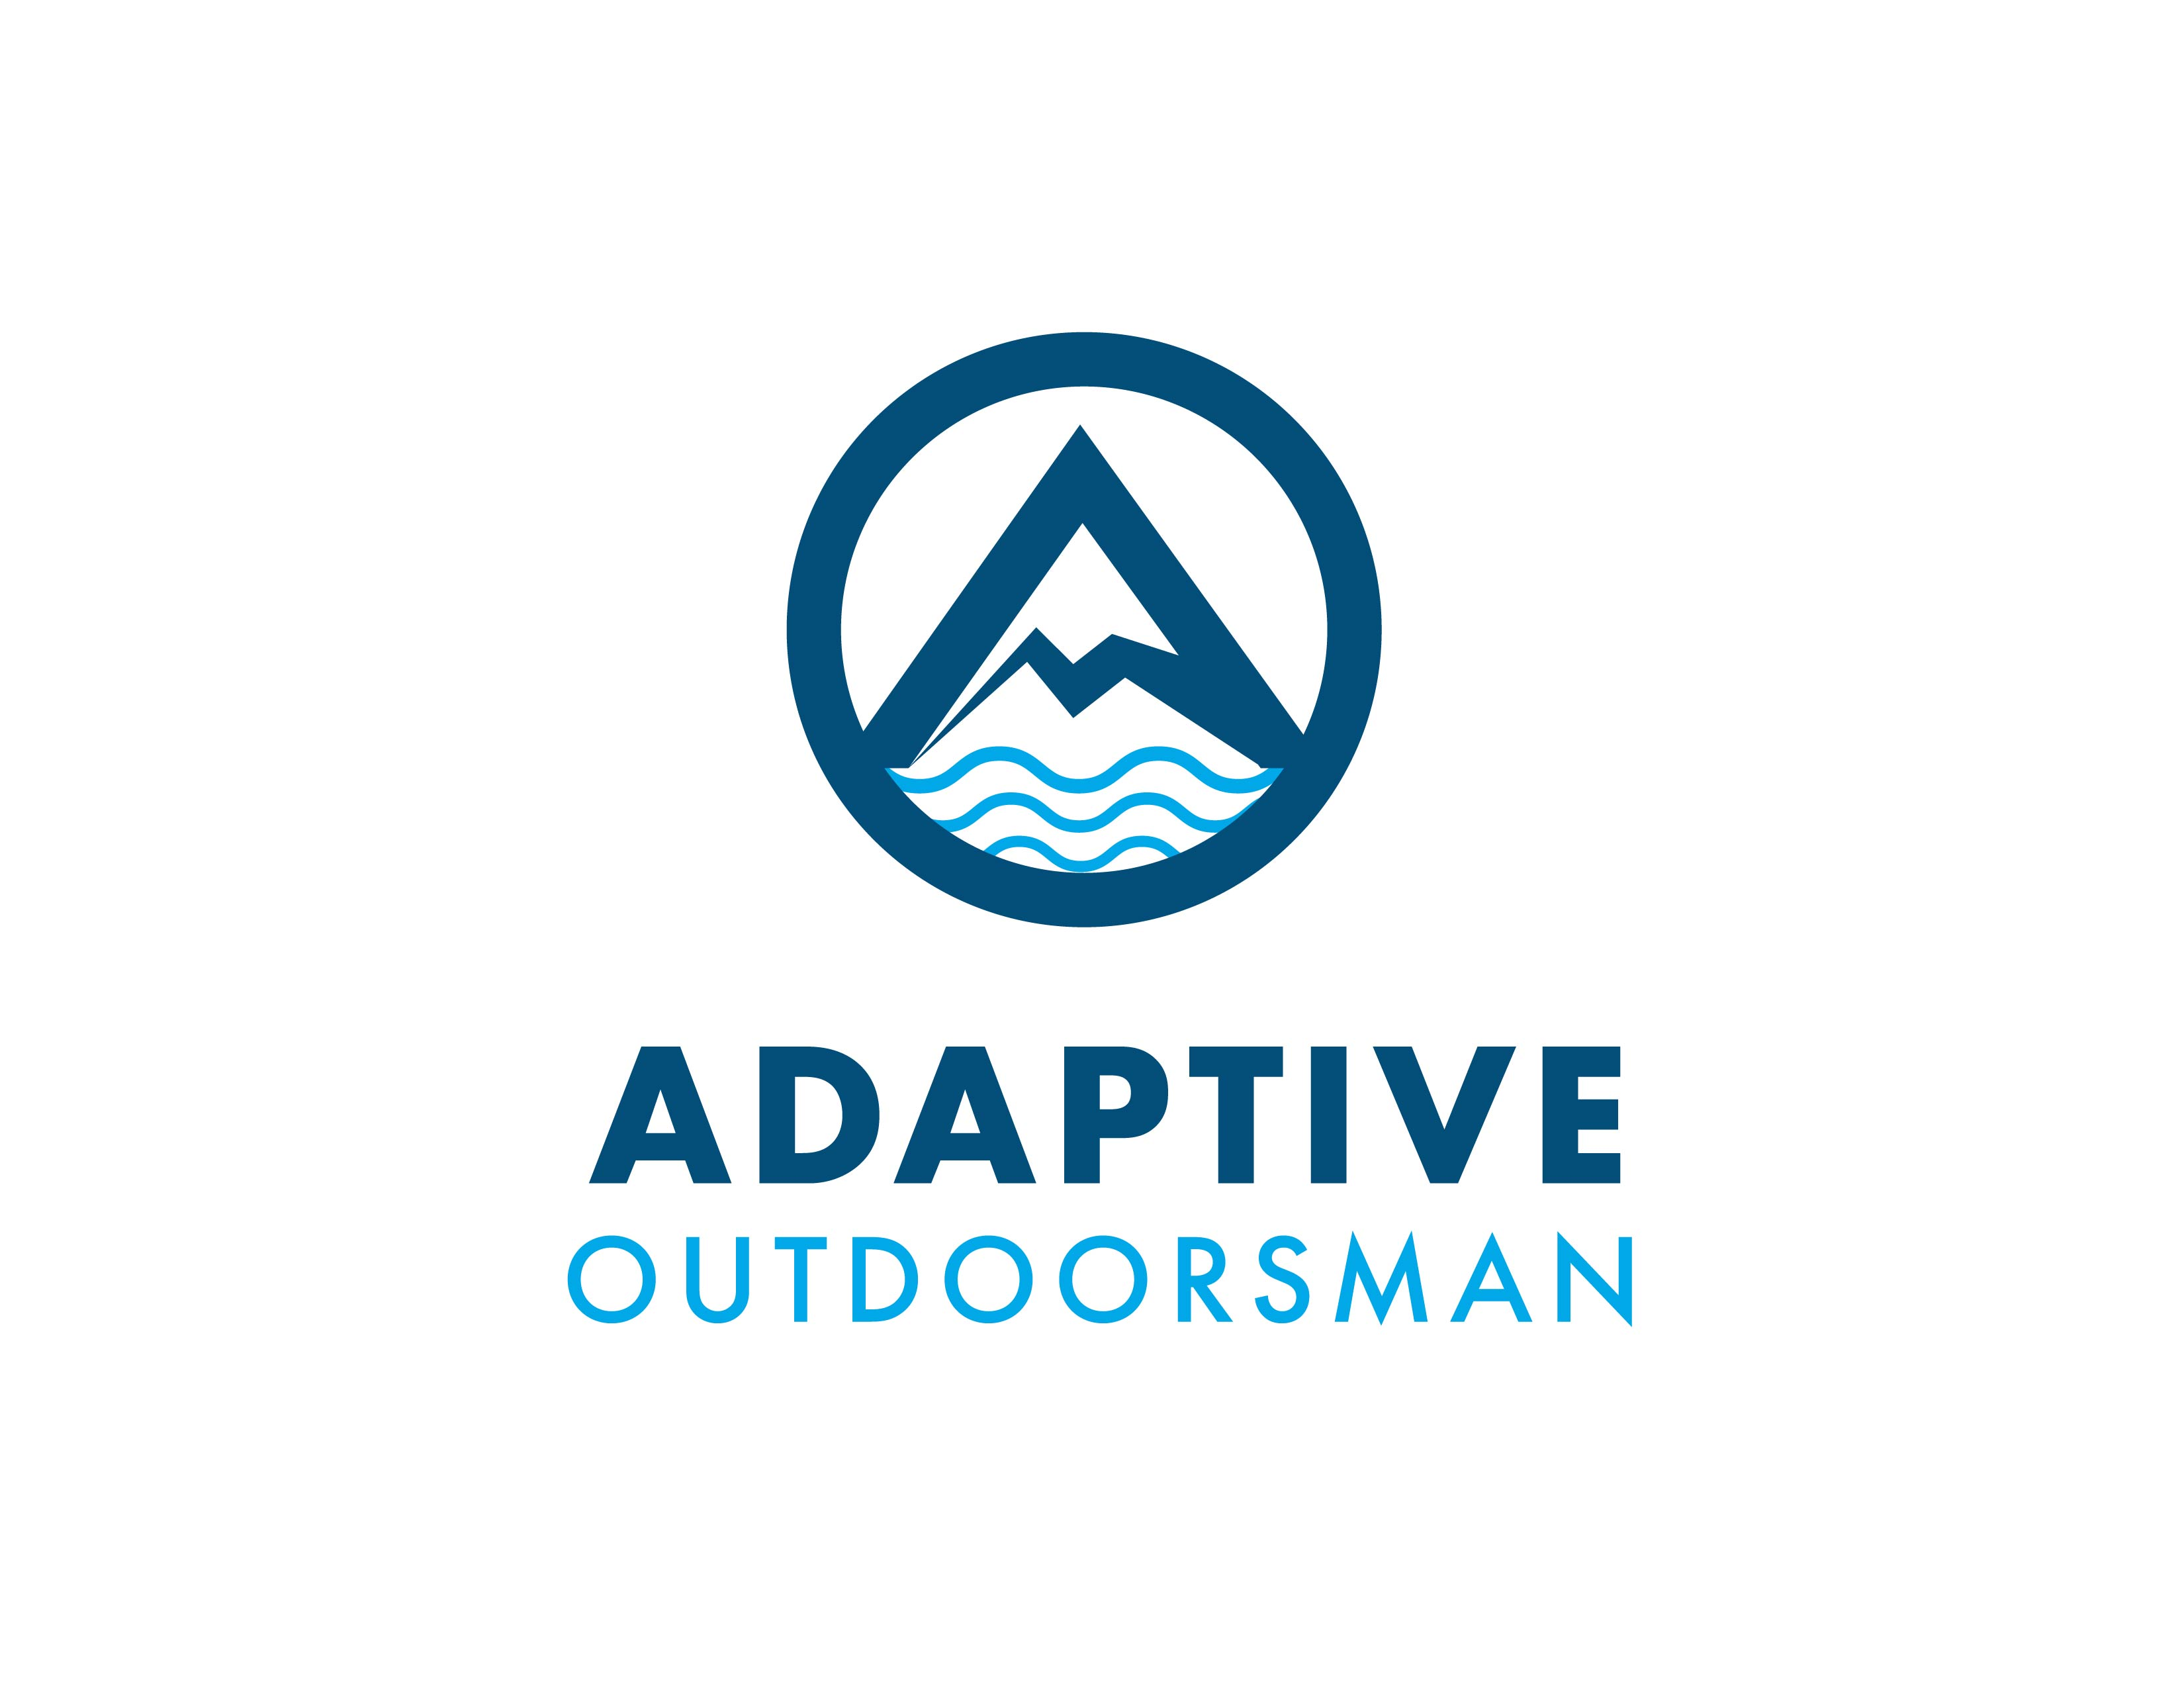 Adaptive Outdoorsman clips 